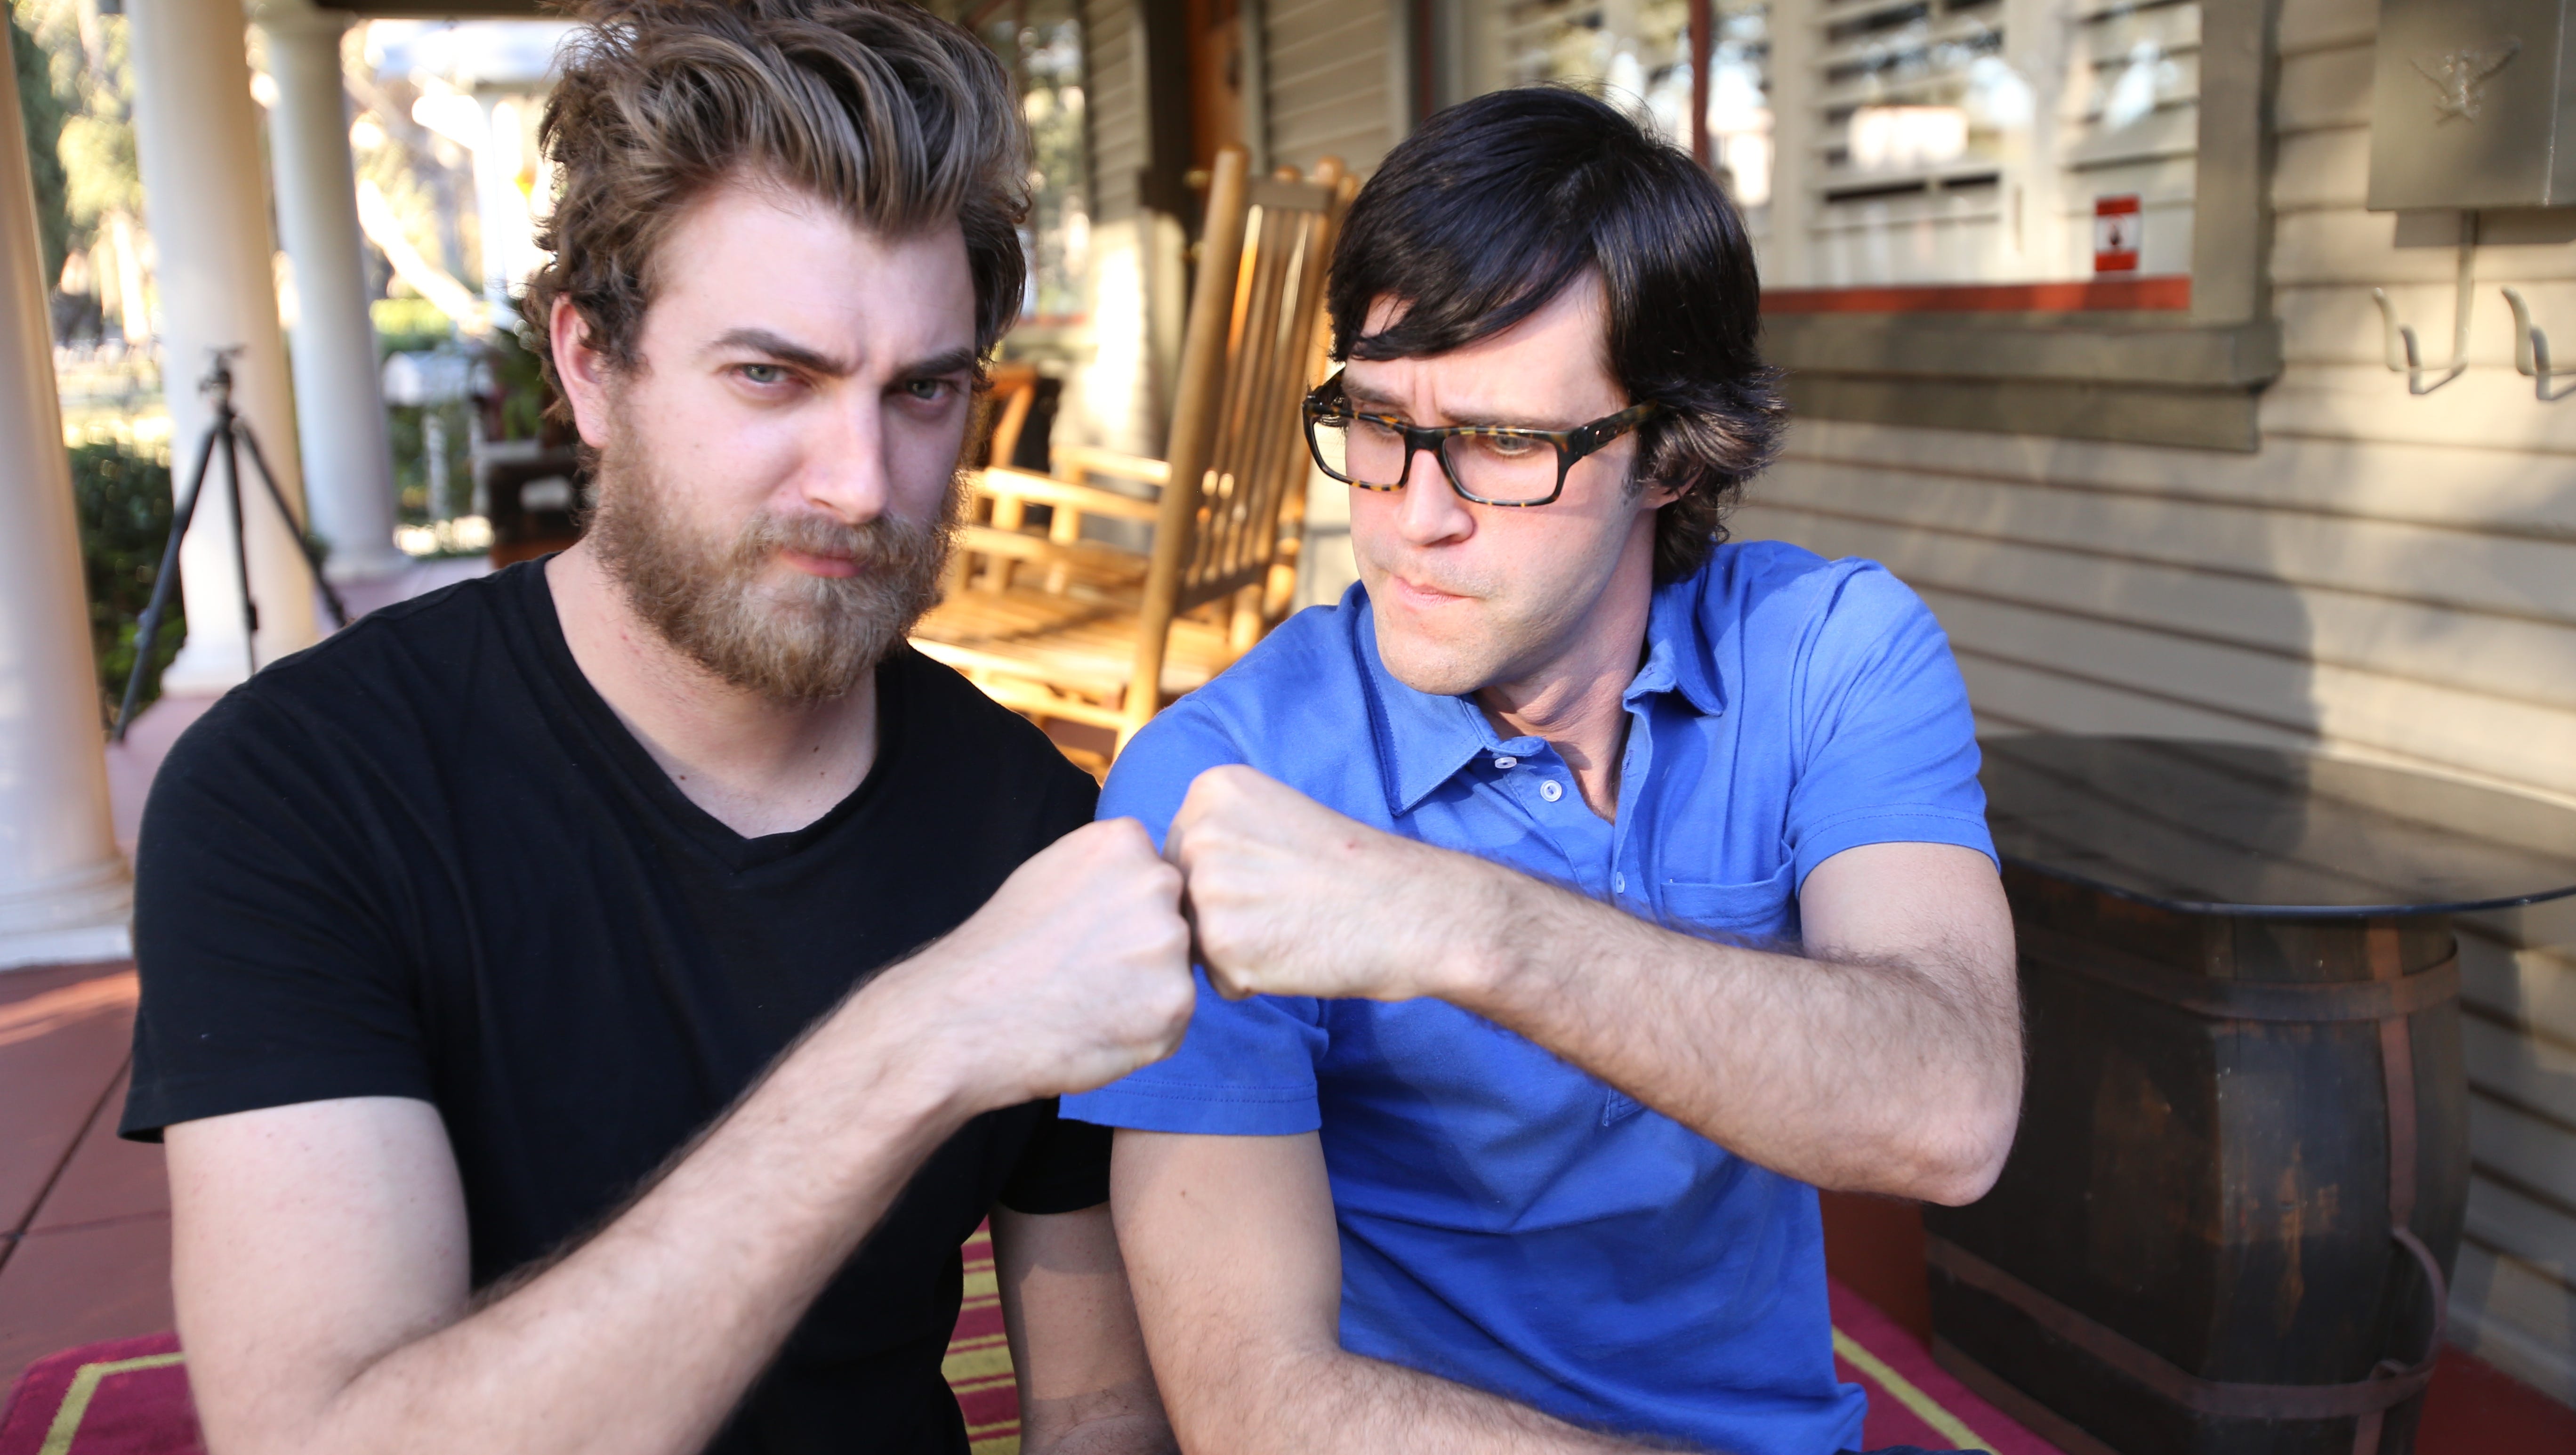 Big-name brands fuel Rhett & Link's funny videos